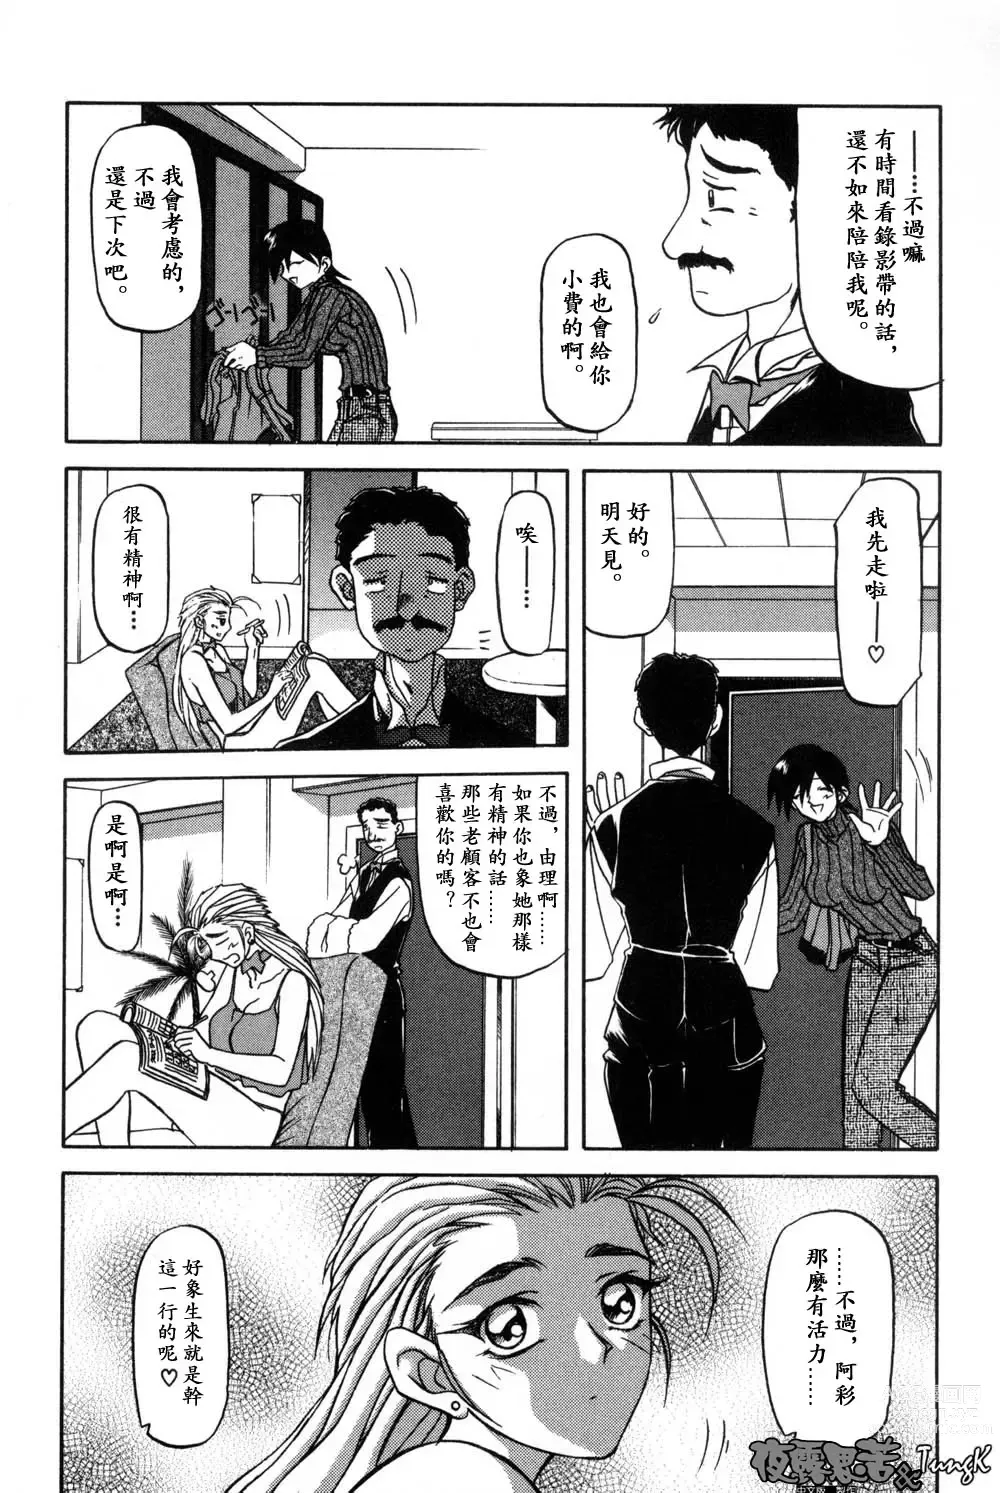 Page 7 of manga 沒有窗戶的小屋